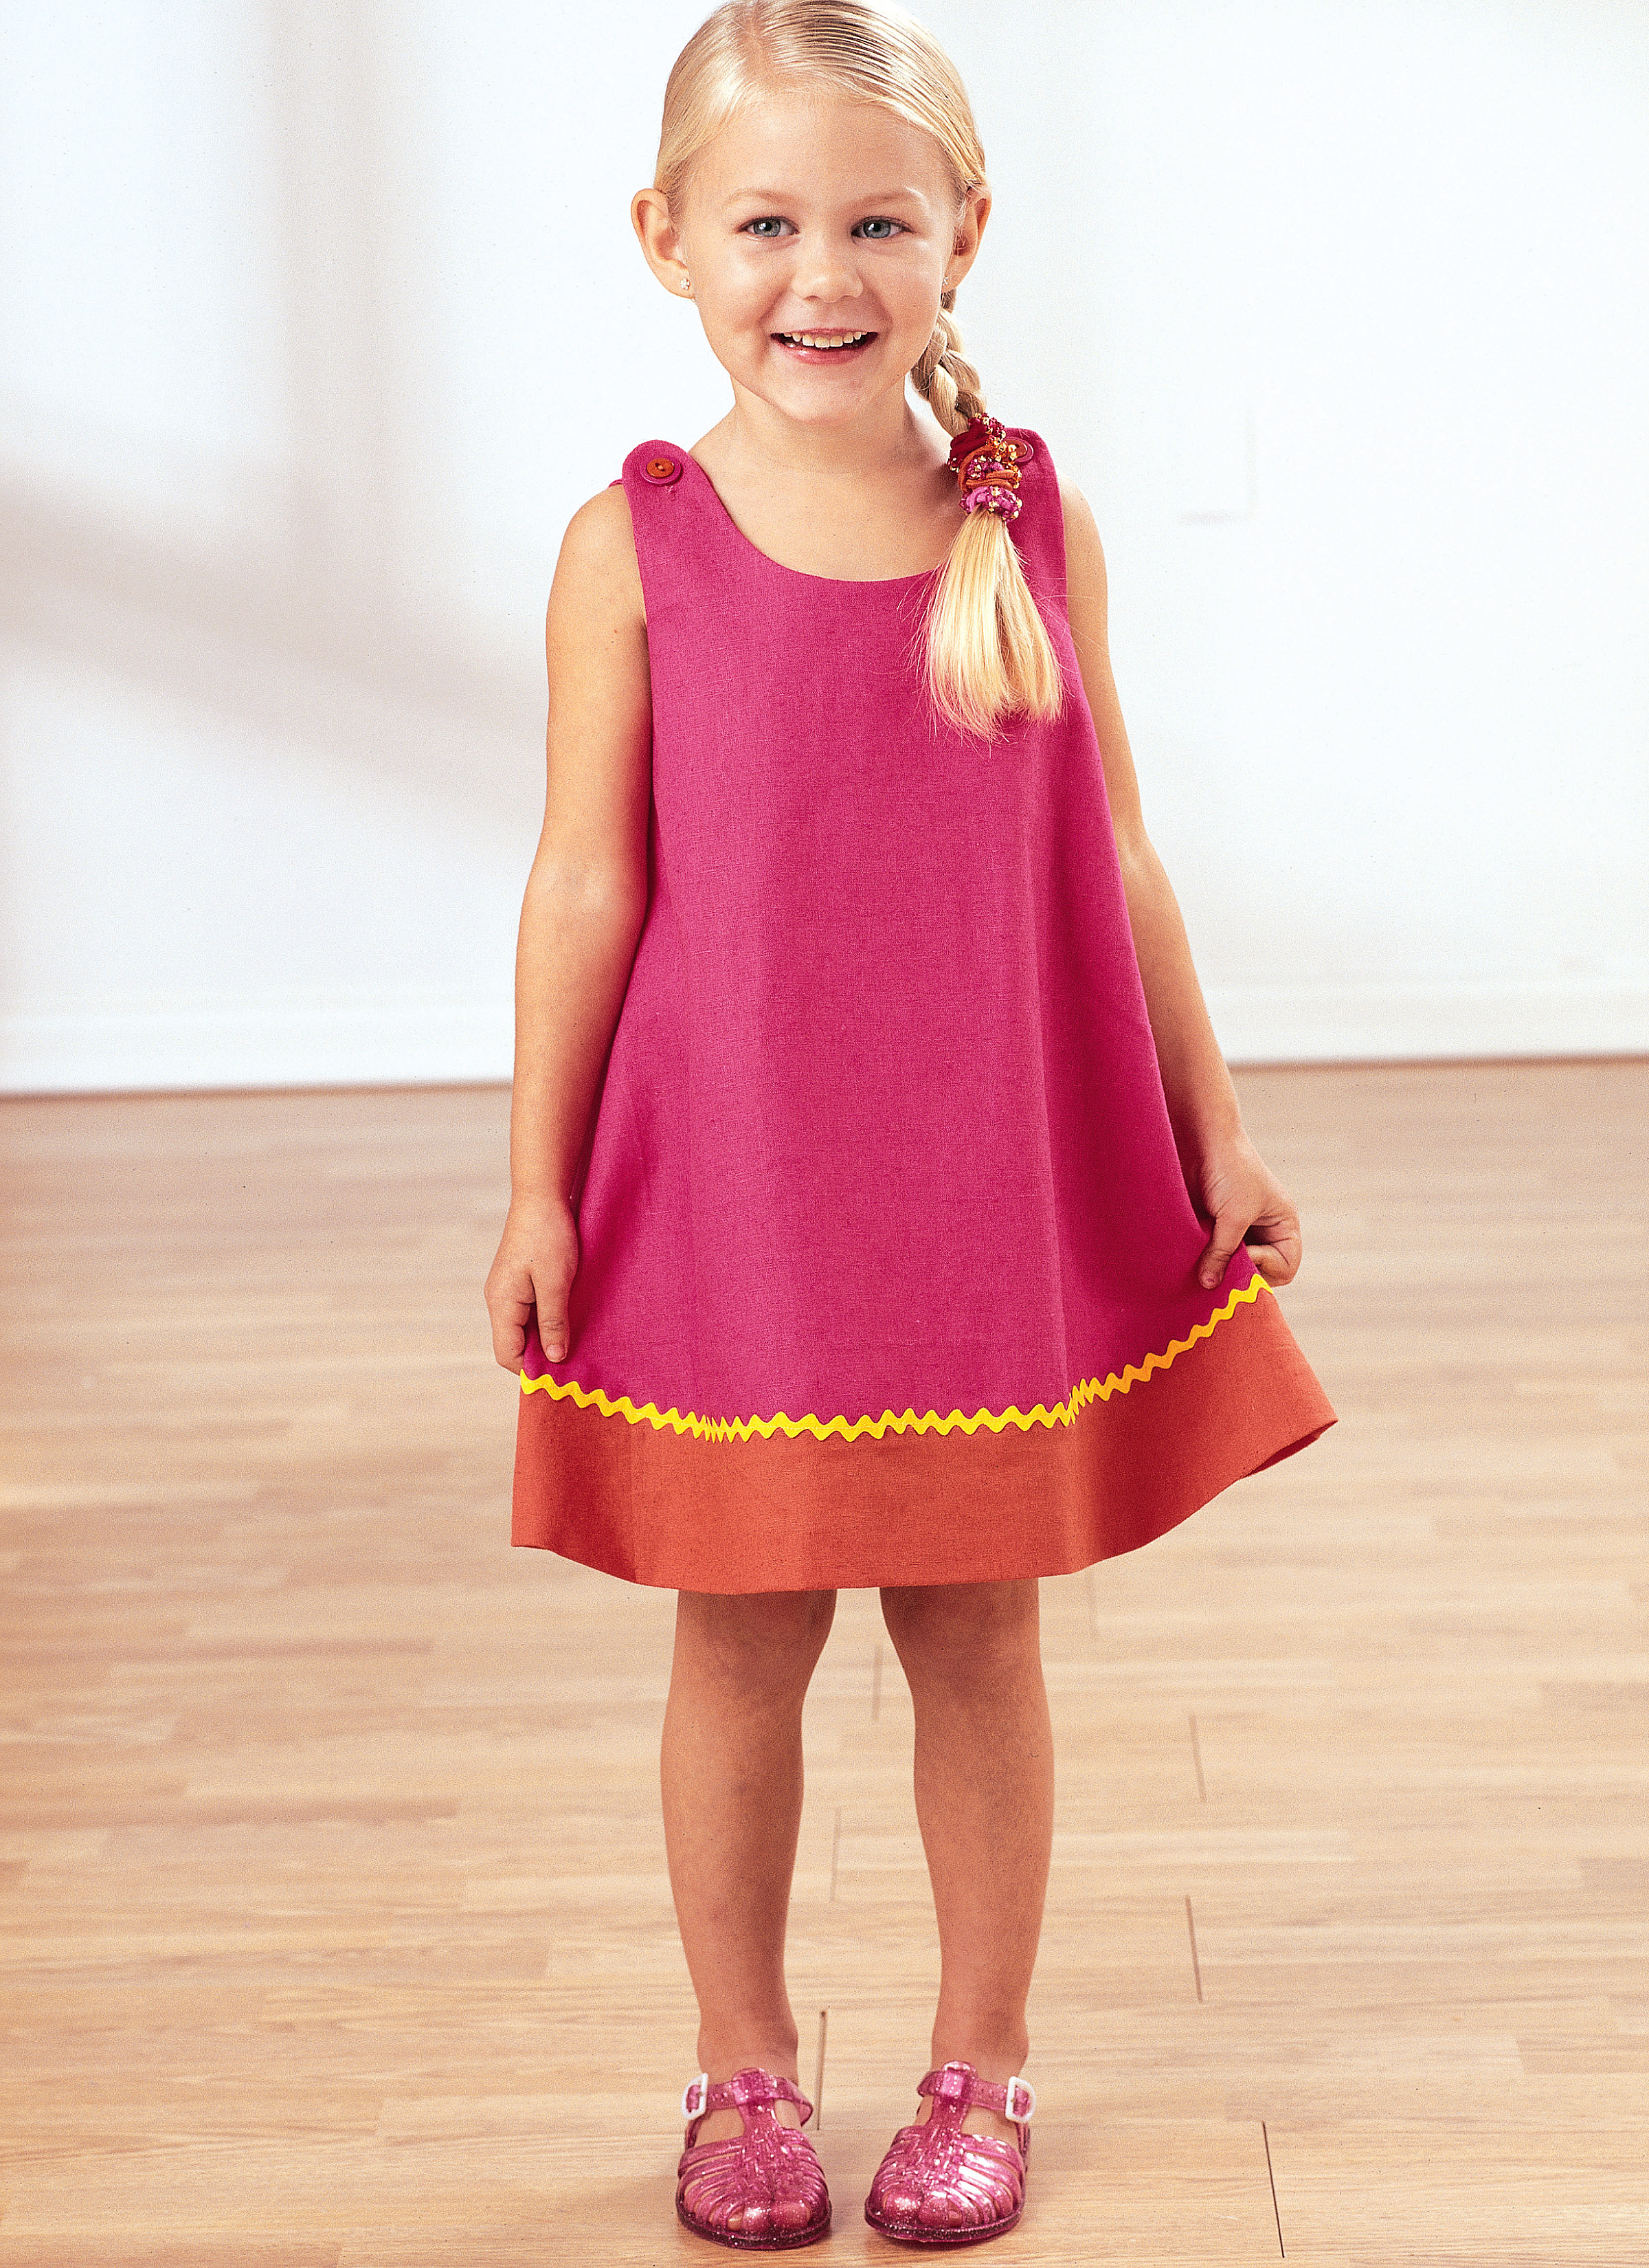 Patrones de costura para confeccionar vestidos de niña Butterick 3772/1 6 modelos distintos, tallas 1 a 3 ó 79 a 94 cm 